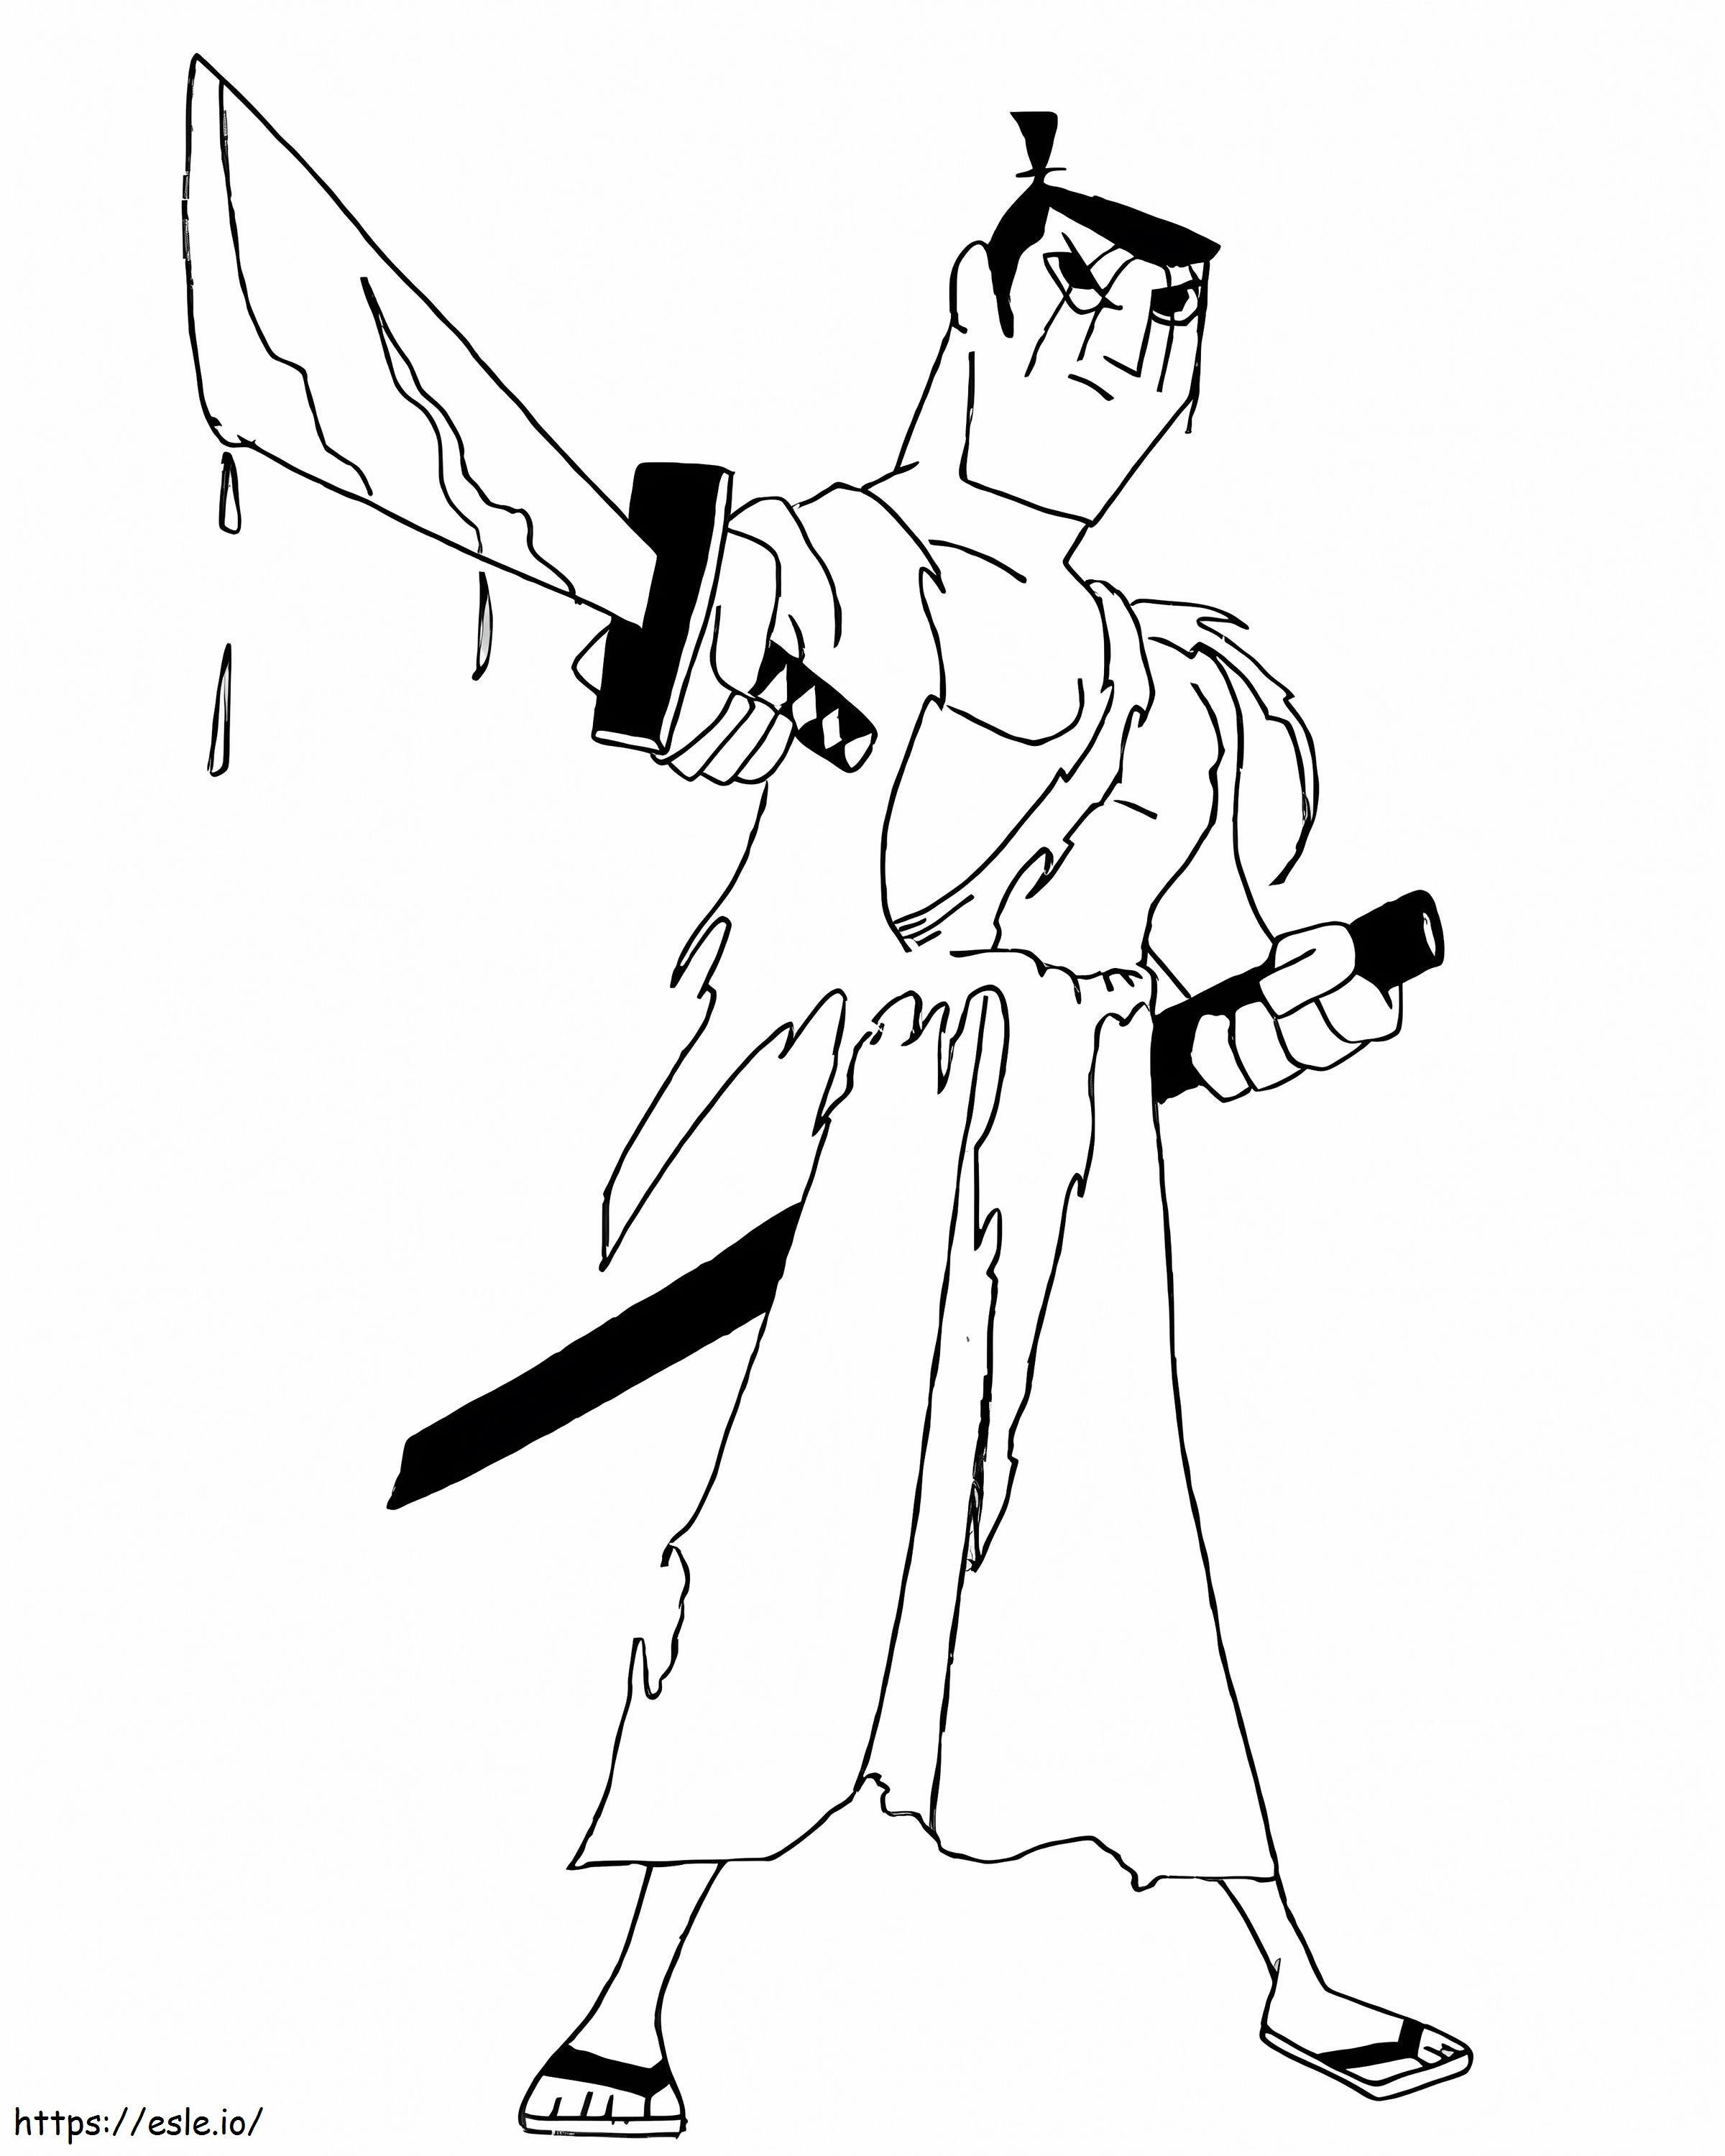 HQ Samurai Jack Image coloring page